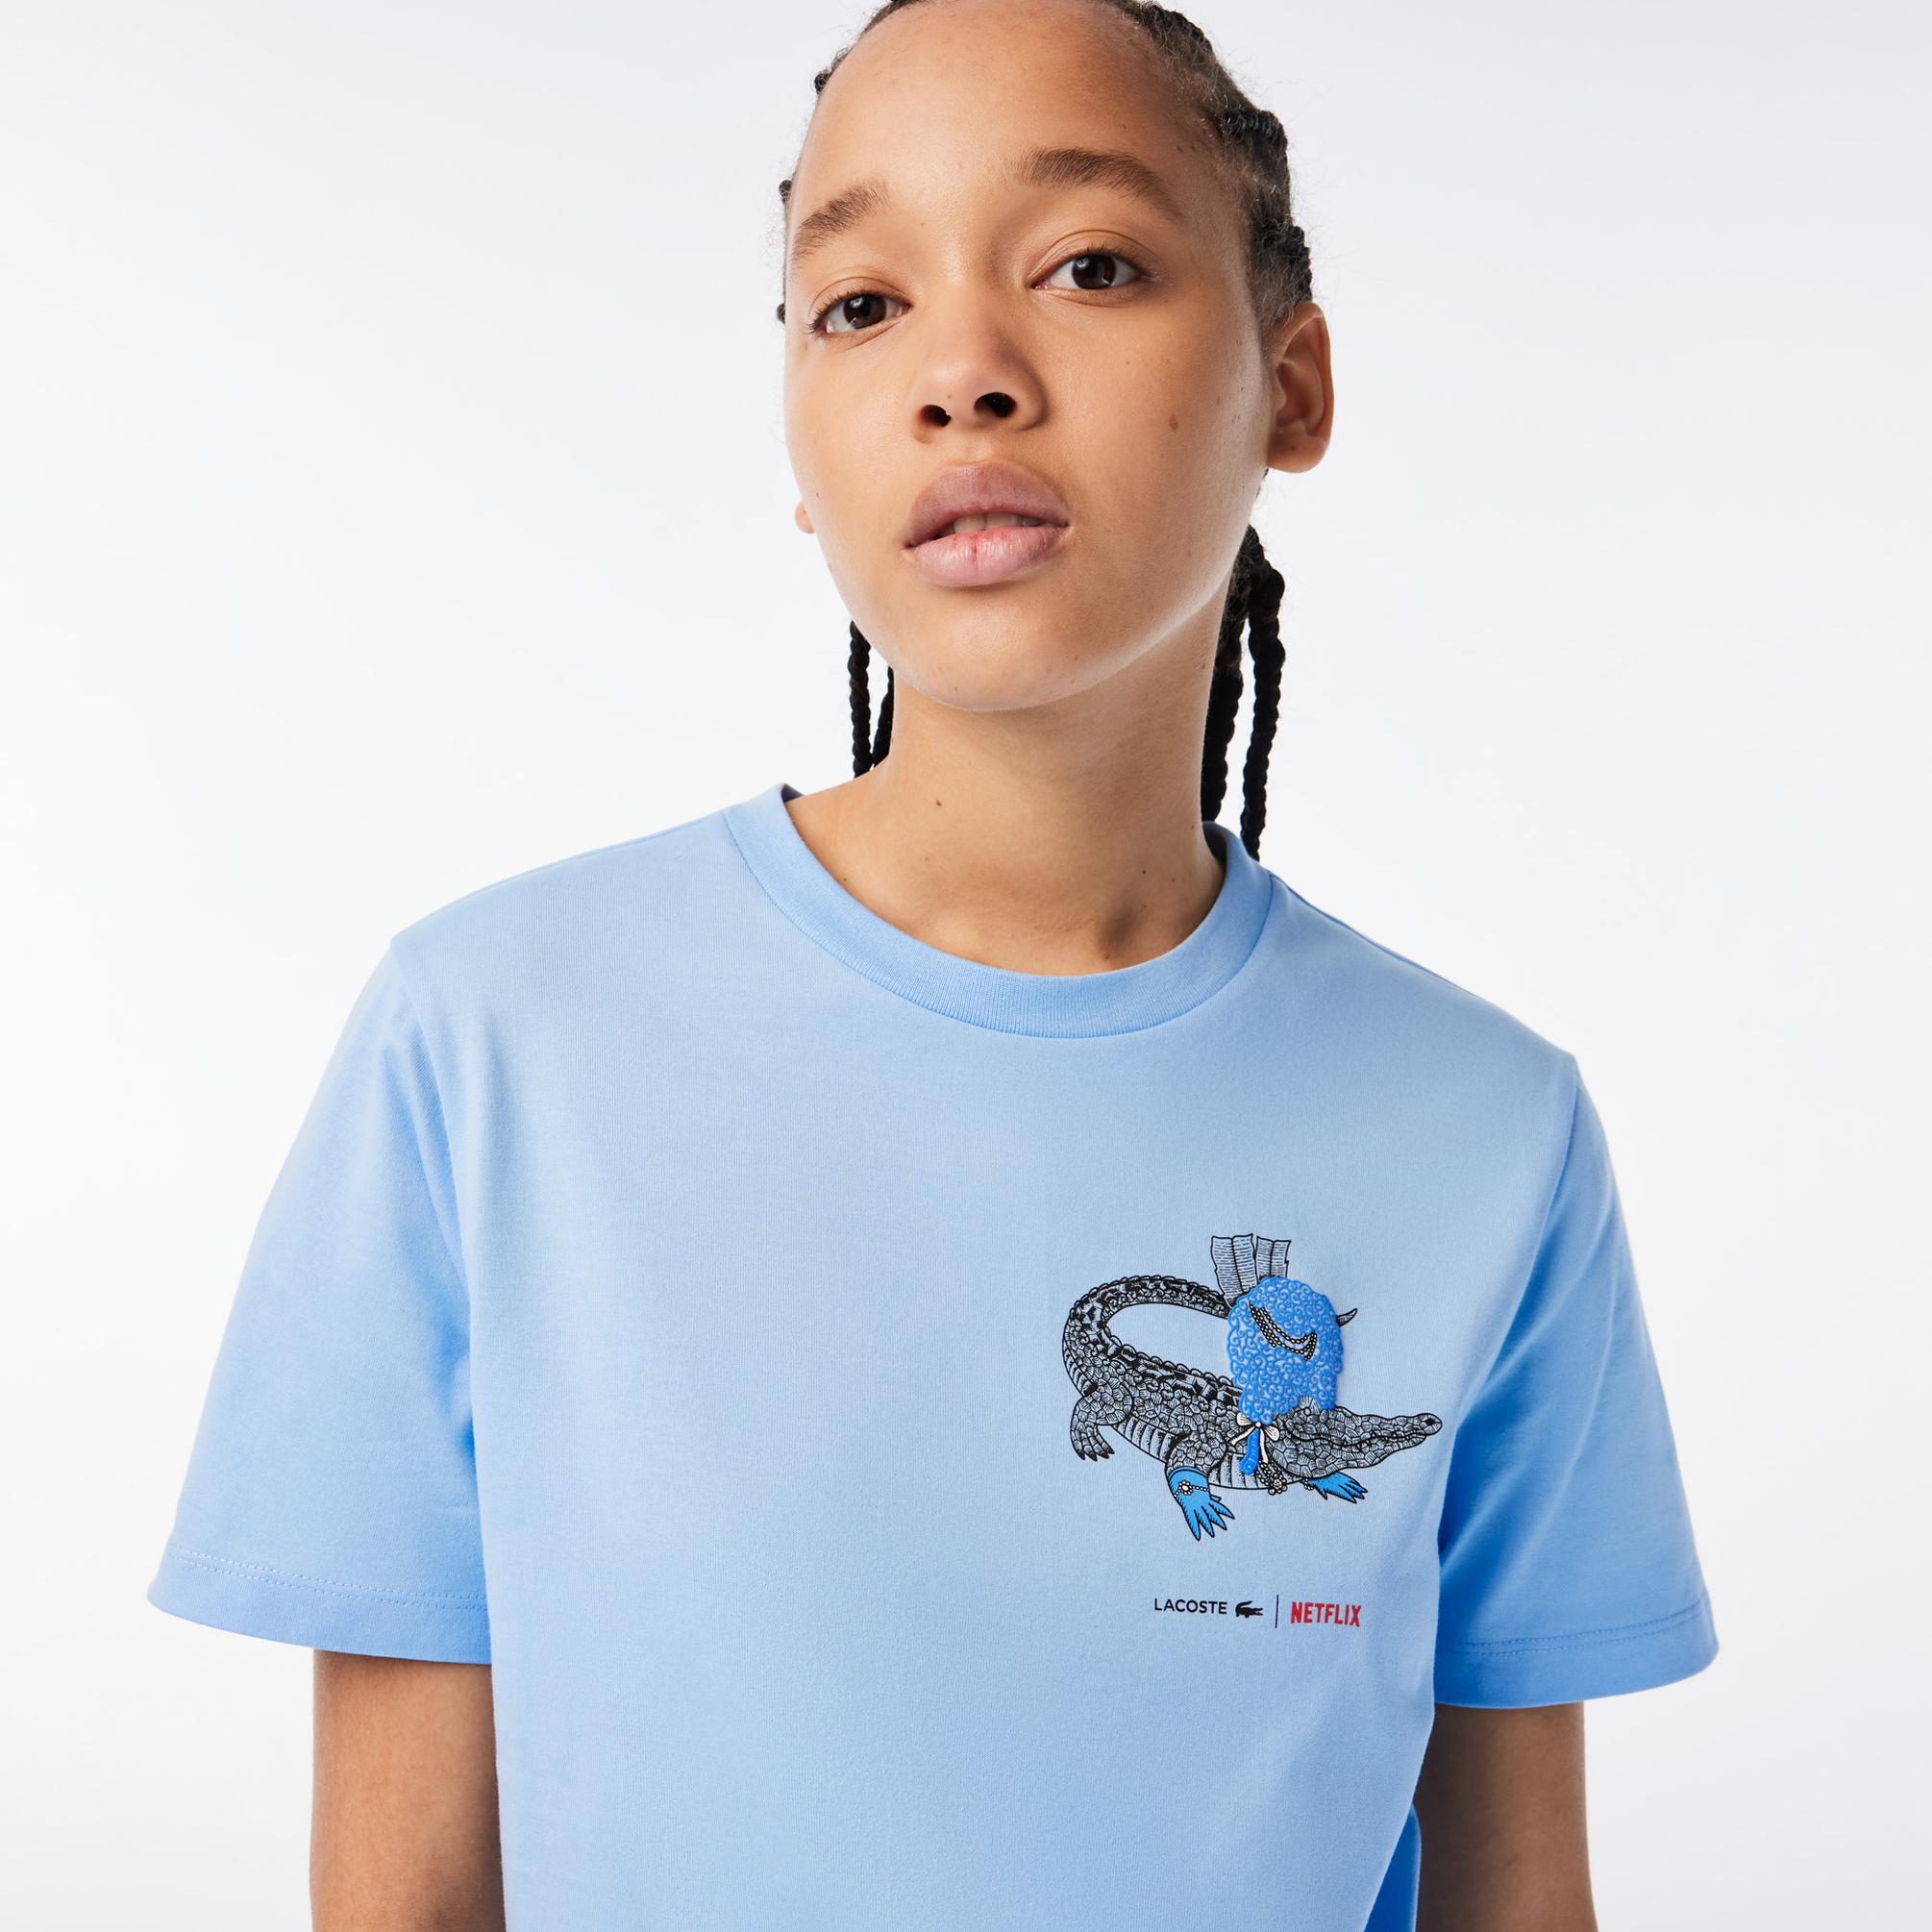  Lacoste Netflix Kadın Mavi T-Shirt